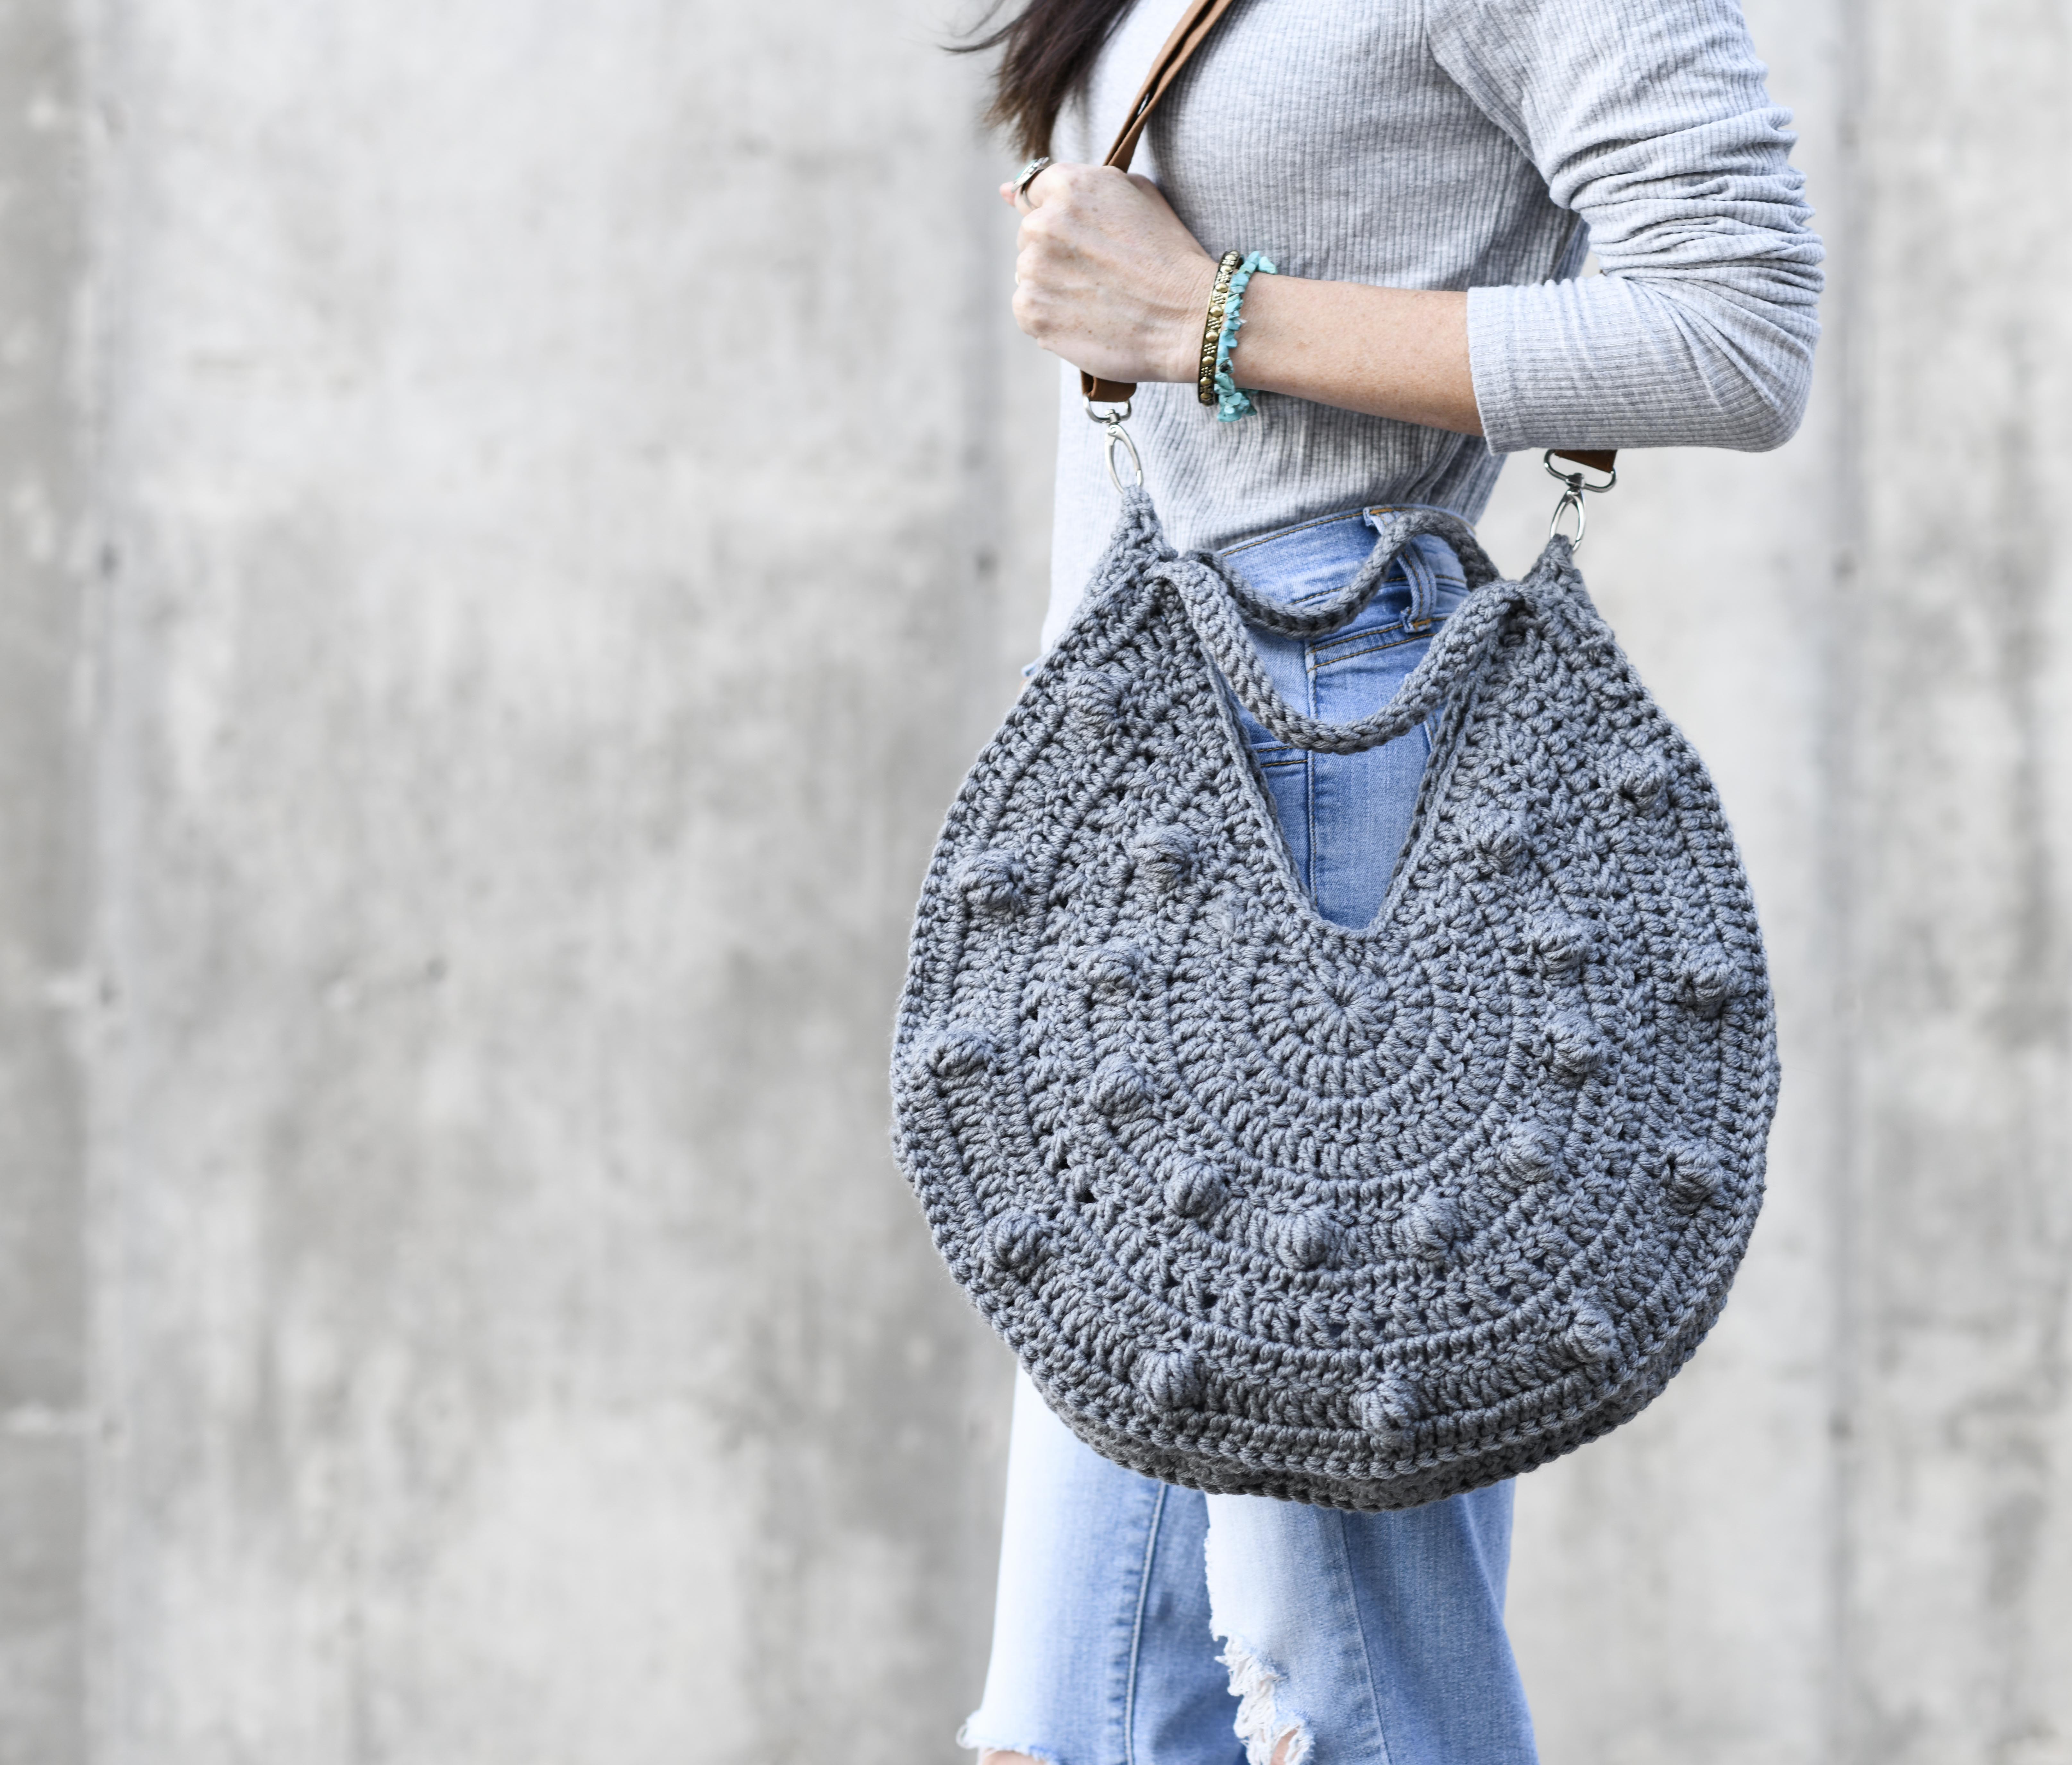 How to Crochet a Basic Cord | Crochet Bag Strap or Handle | ViVi Berry  Crochet - YouTube